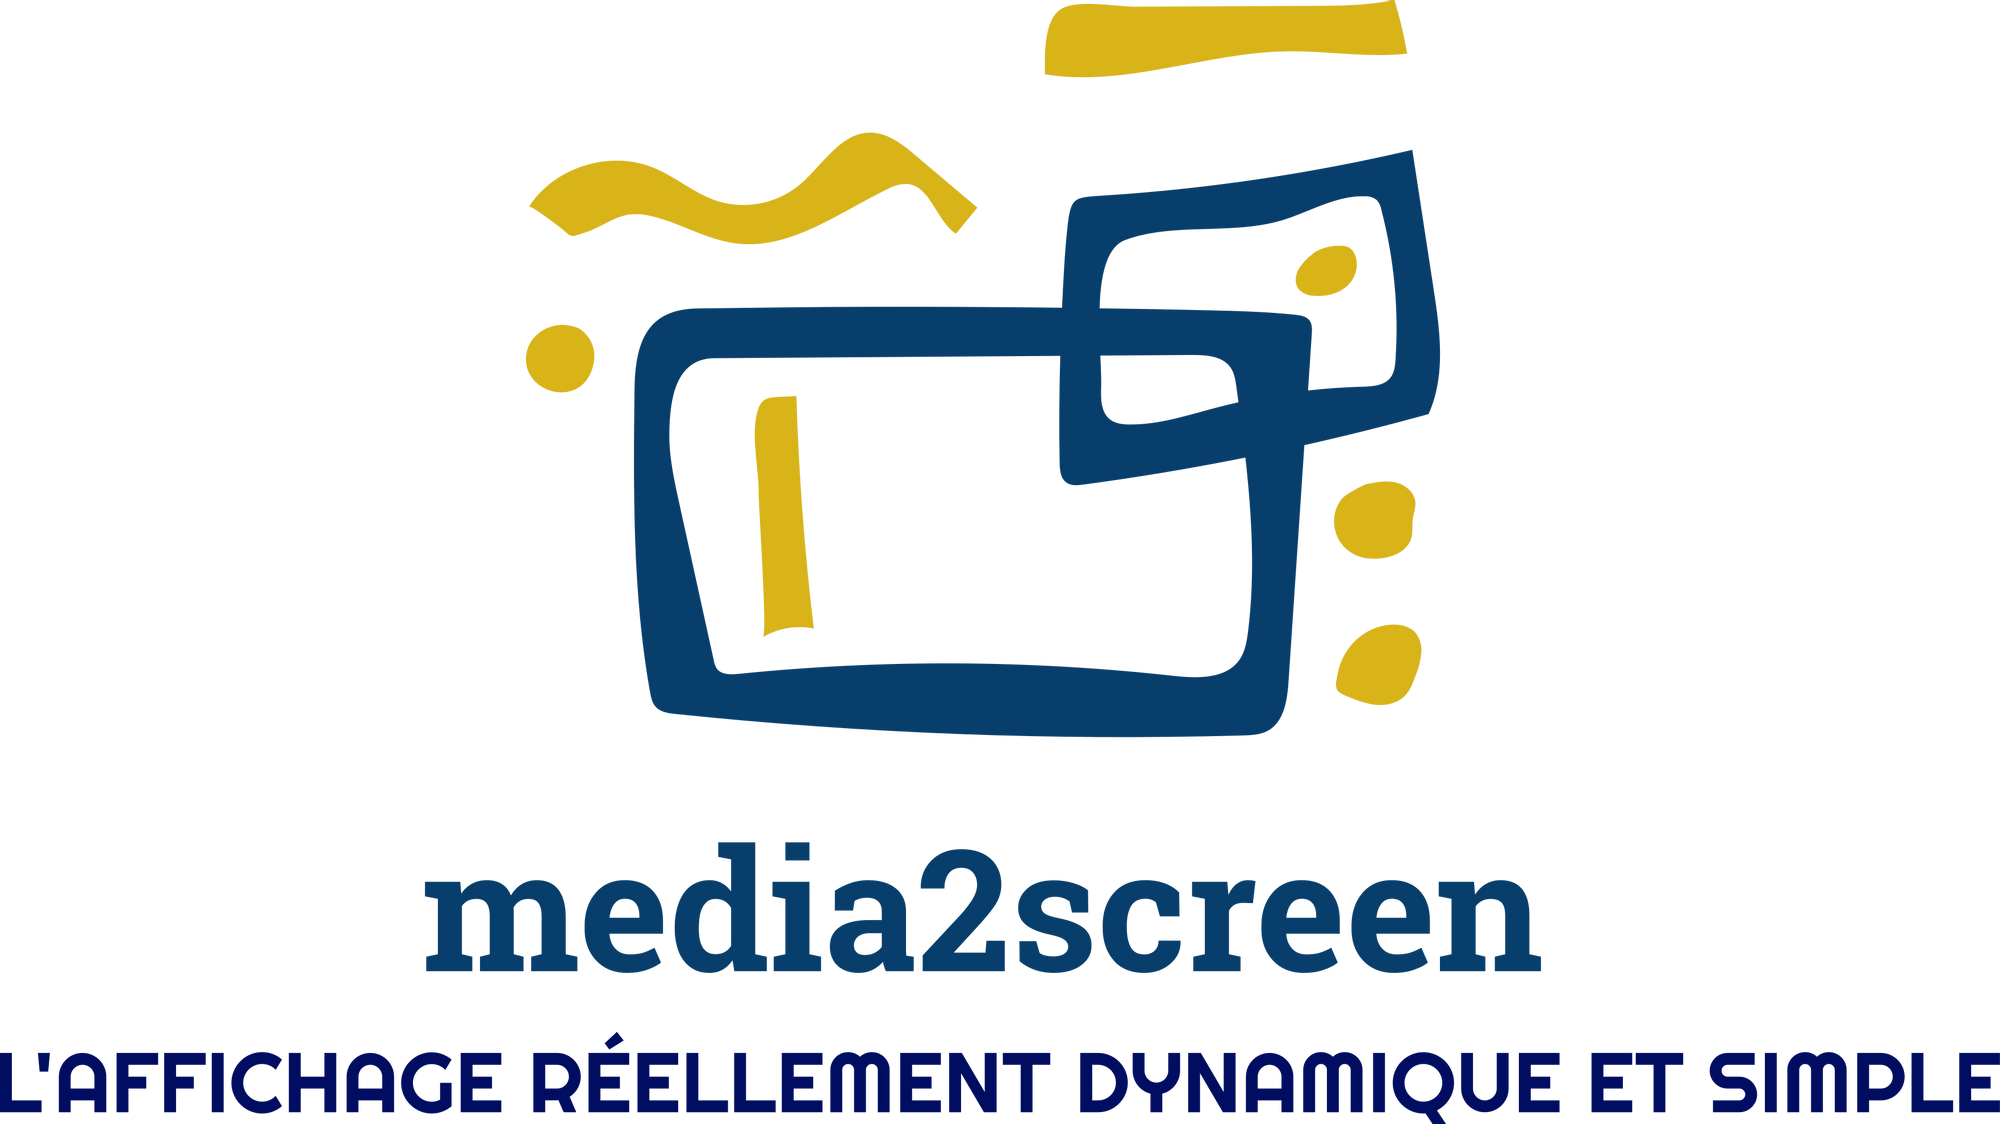 Media2screen logo